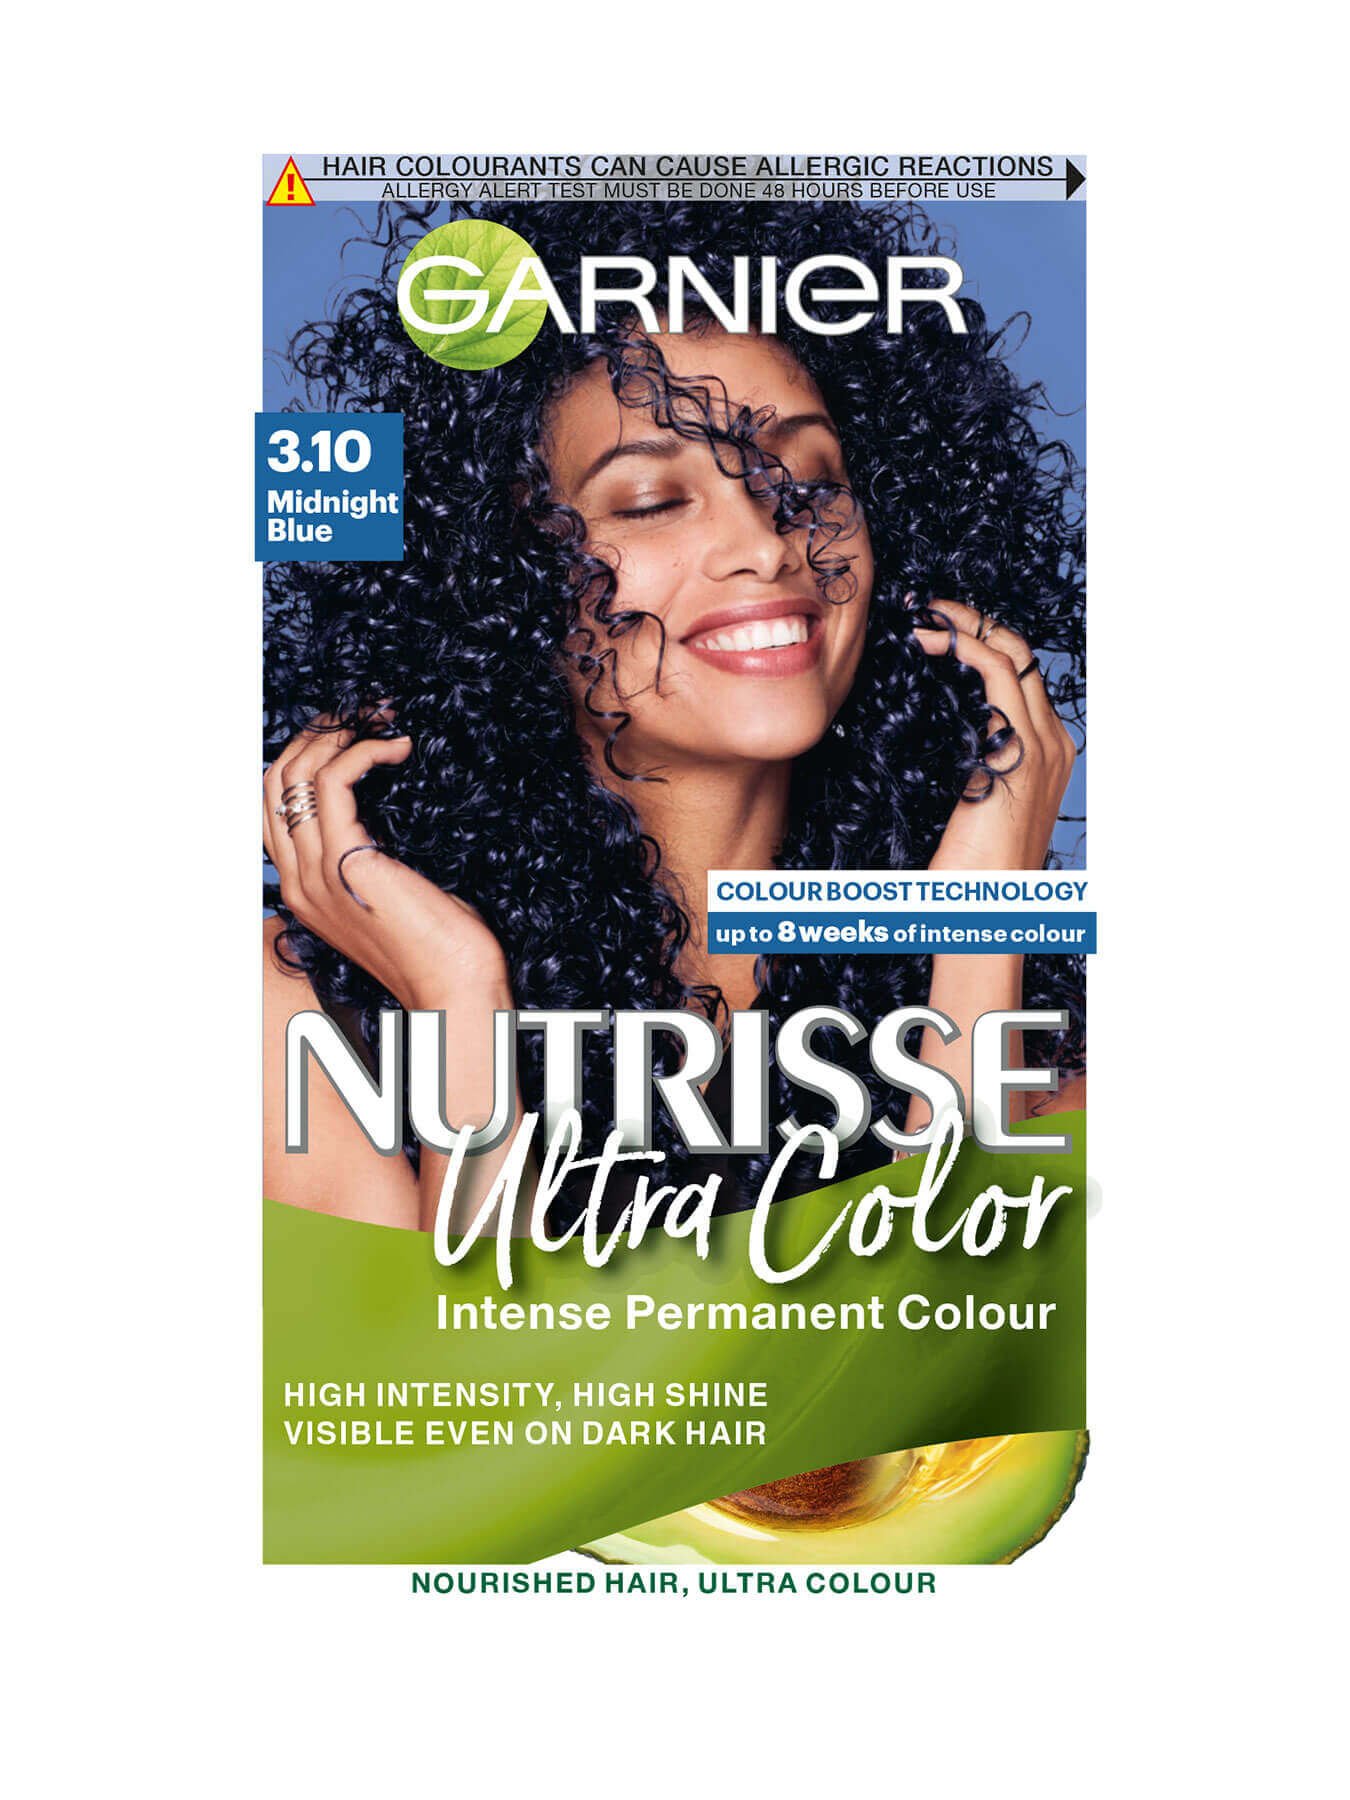 Midnight Blue Hair Dye | Nutrisse Ultra Color | Garnier